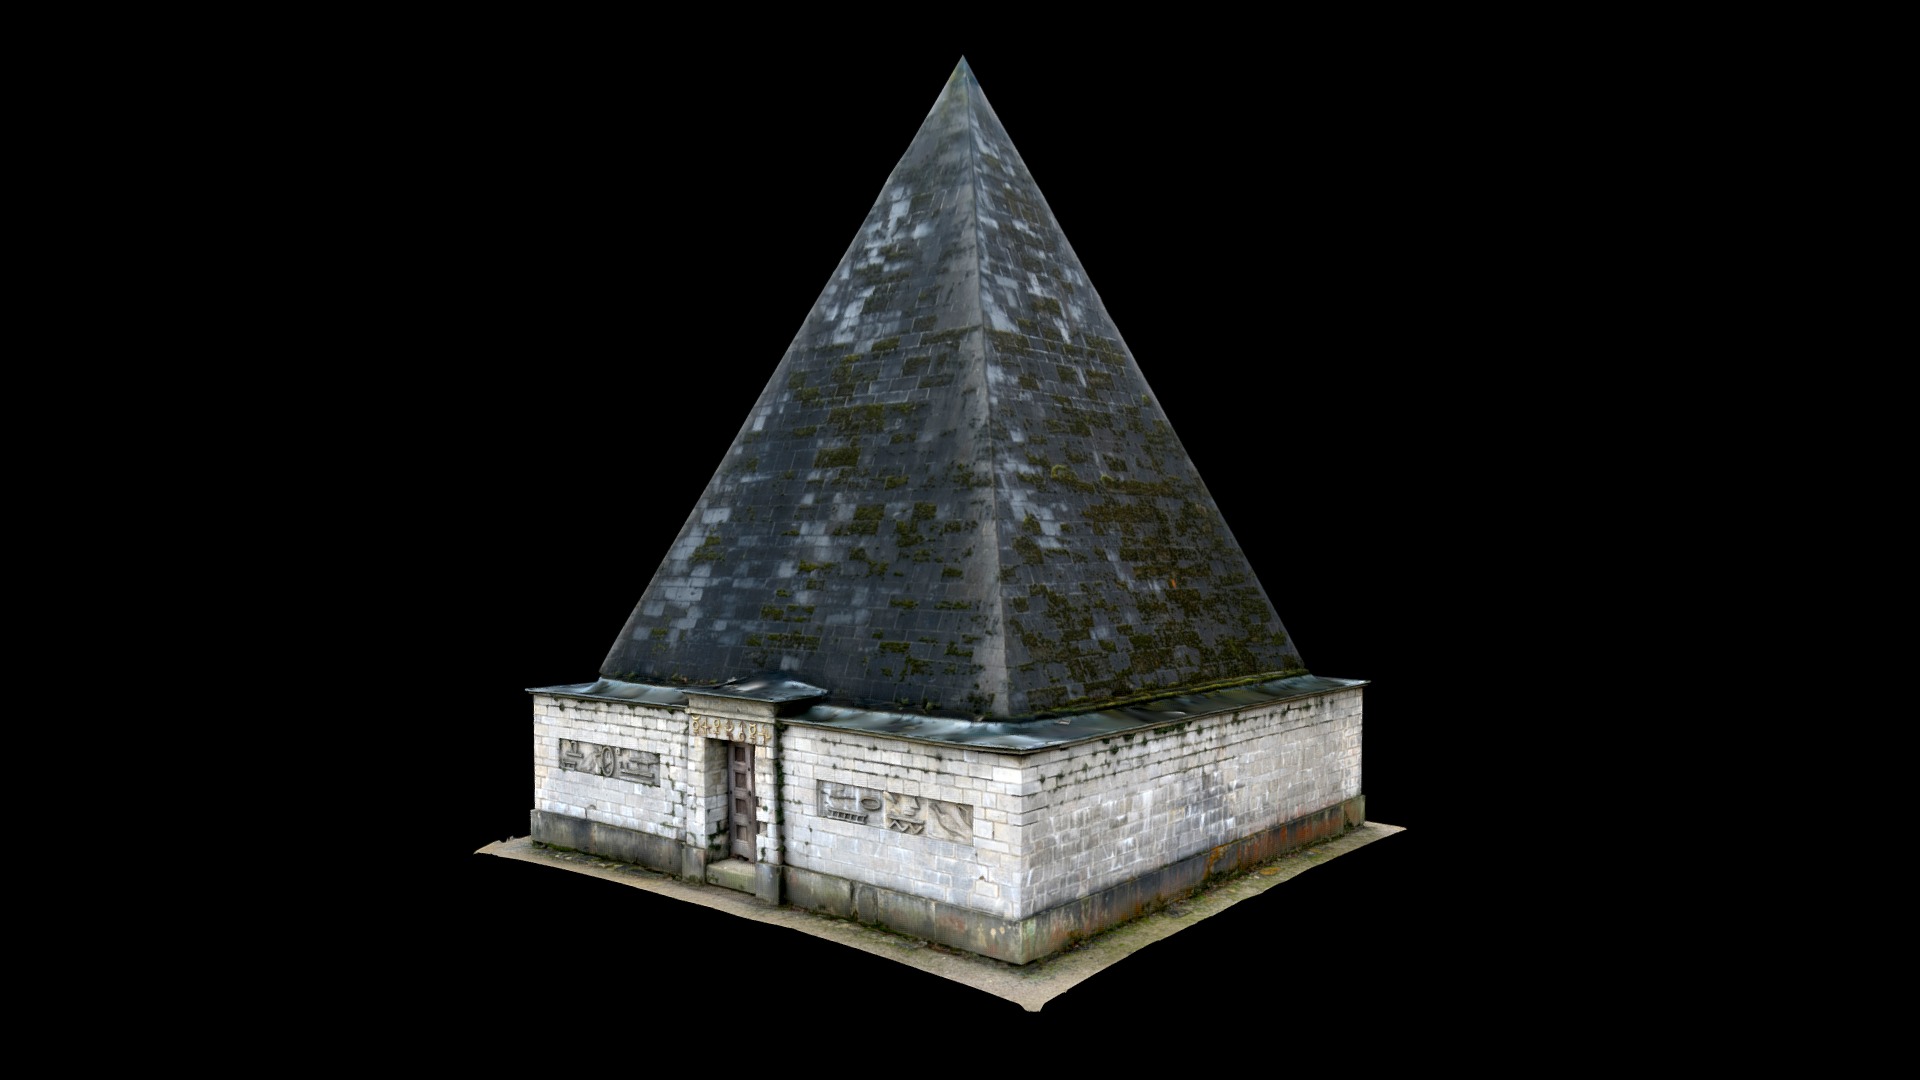 3D model Pyramid Ice House, Neuer Garten, Potsdam, DE - This is a 3D model of the Pyramid Ice House, Neuer Garten, Potsdam, DE. The 3D model is about a pyramid with a black background.